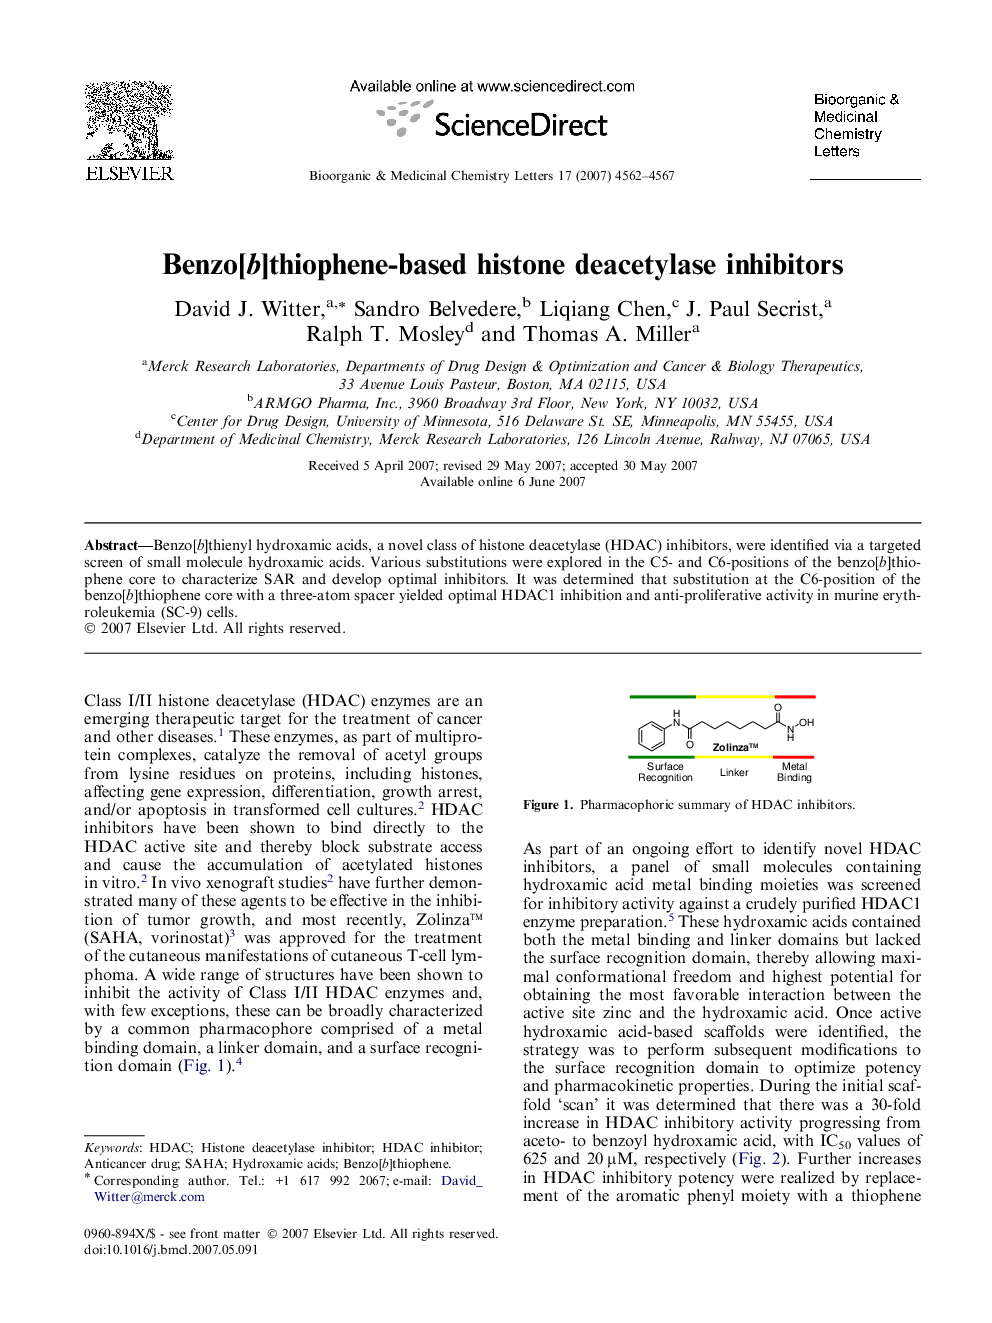 Benzo[b]thiophene-based histone deacetylase inhibitors